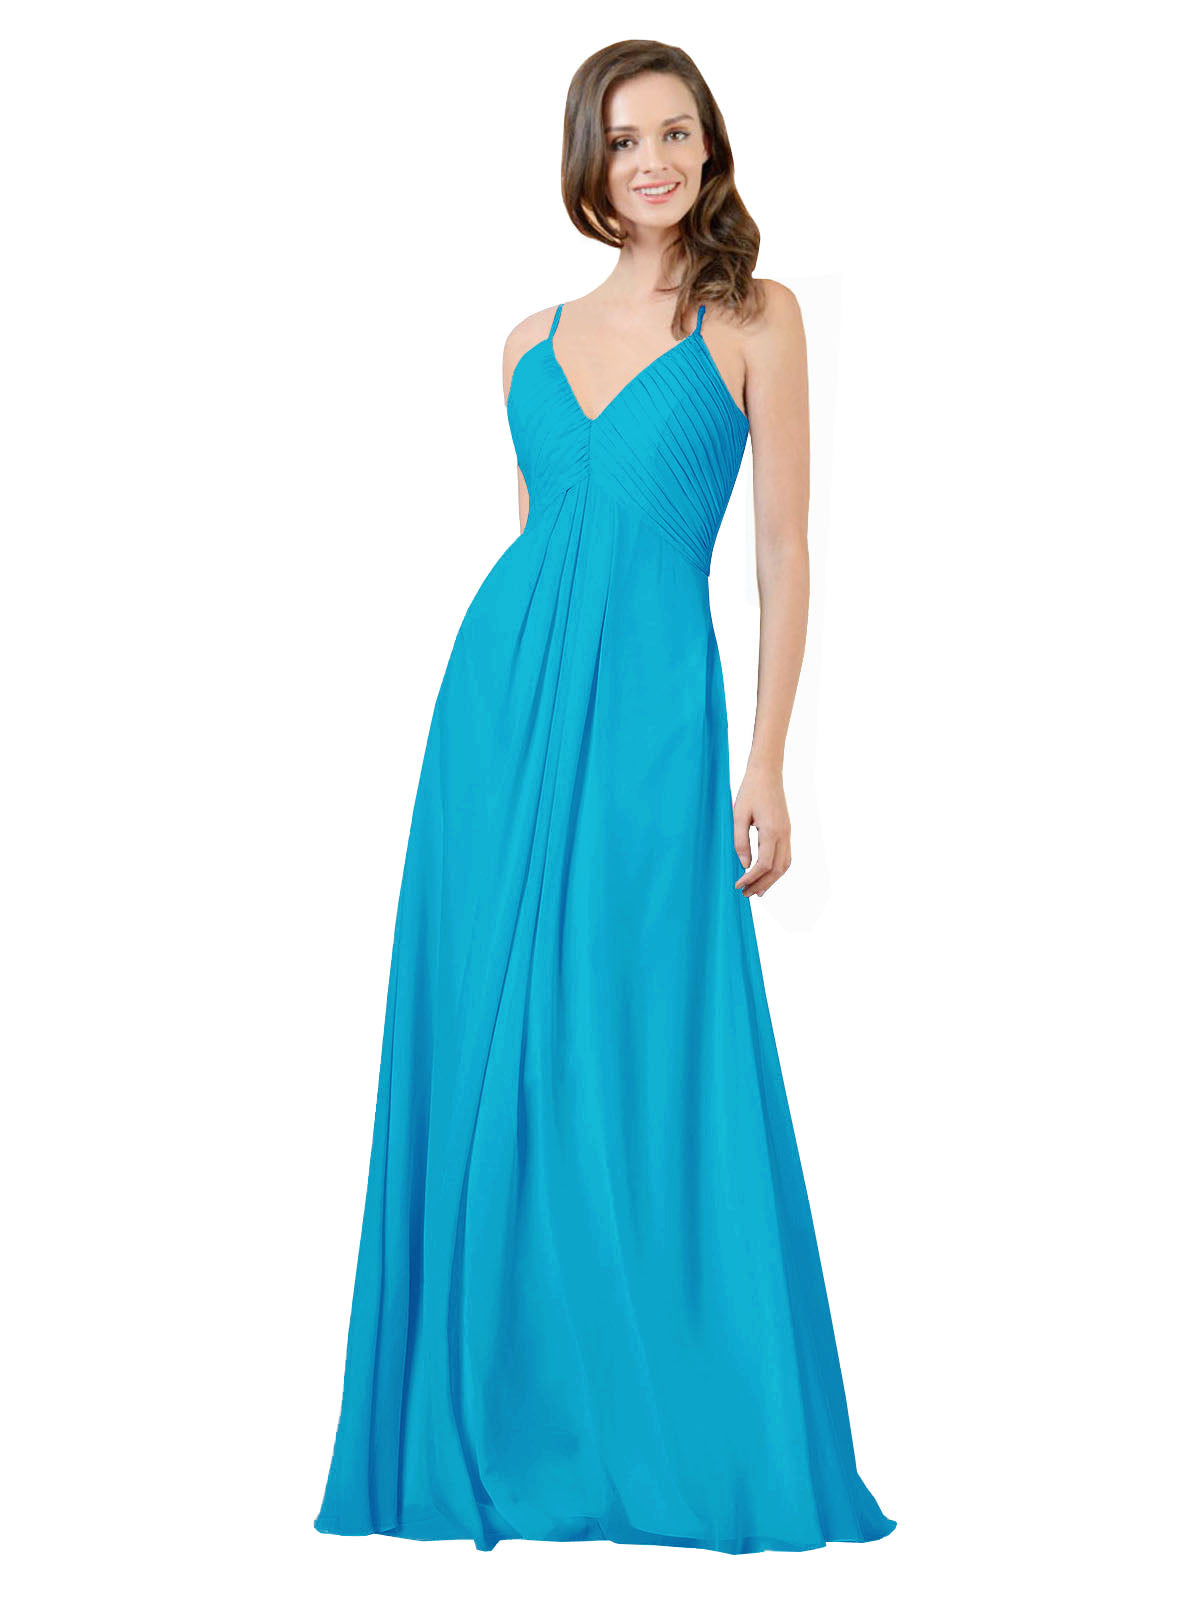 Turquoise A-Line V-Neck Spaghetti Straps Sleeveless Long Bridesmaid Dress Kari